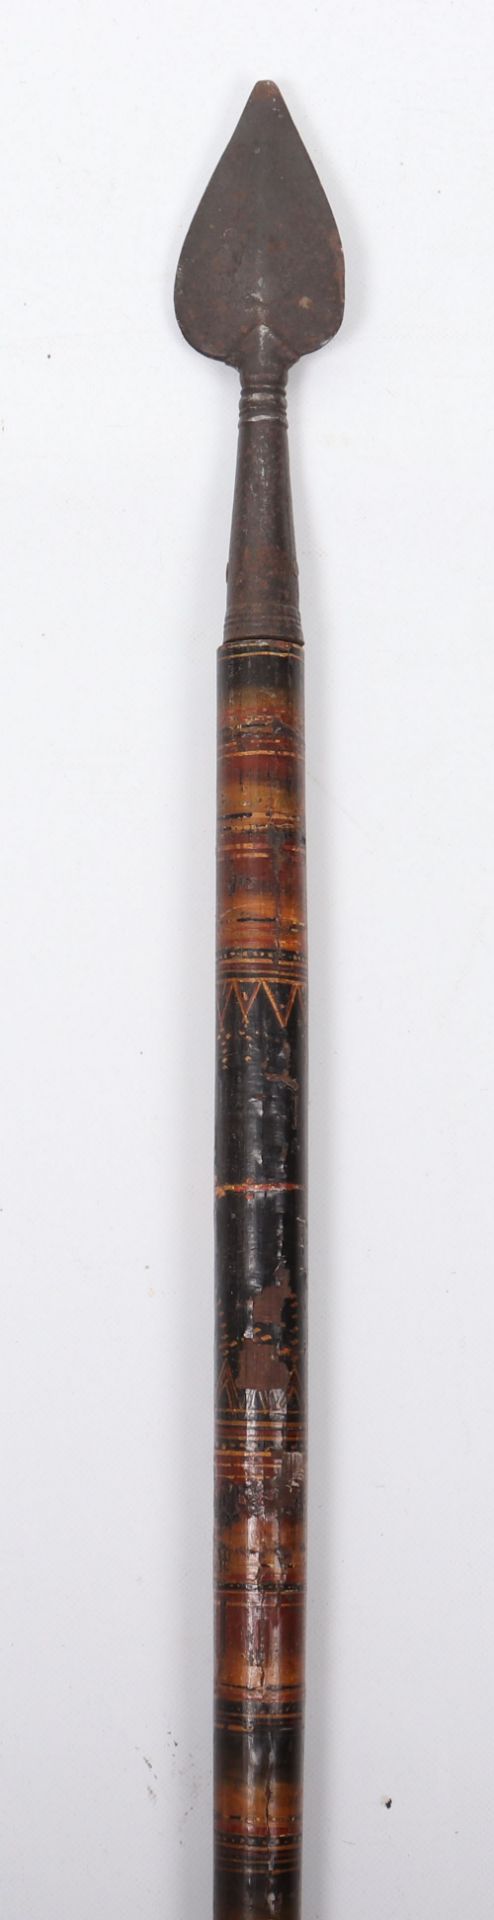 Ceylonese Spear Patisthanaya, Probably 18th or 19th Century